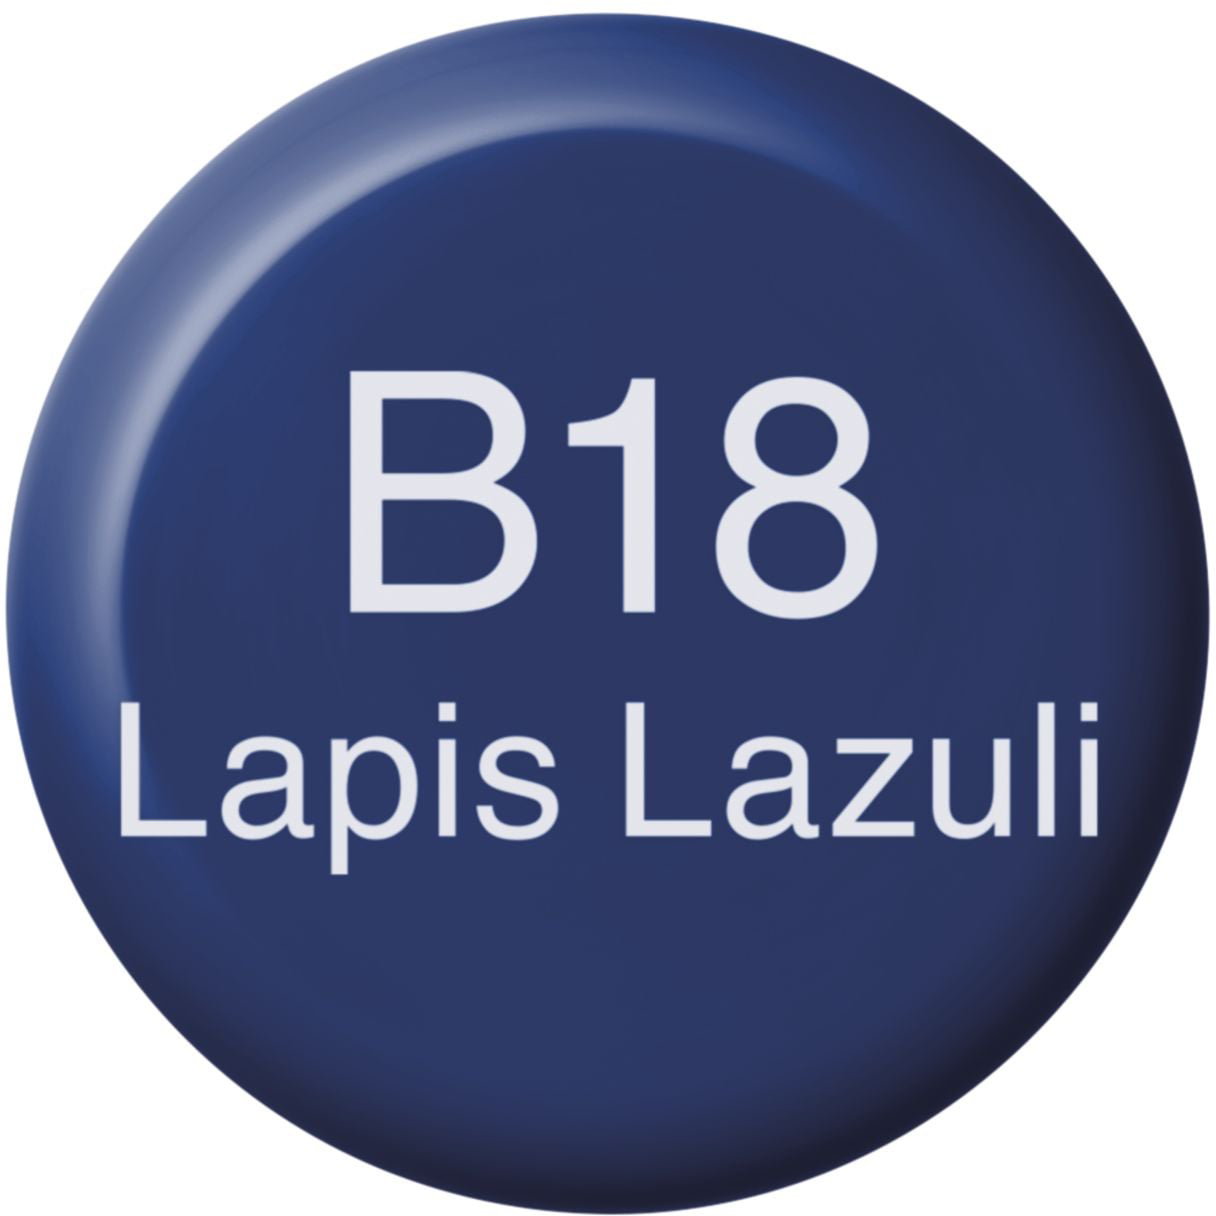 COPIC Ink Refill 21076224 B18 - Lapis Lazuli B18 - Lapis Lazuli